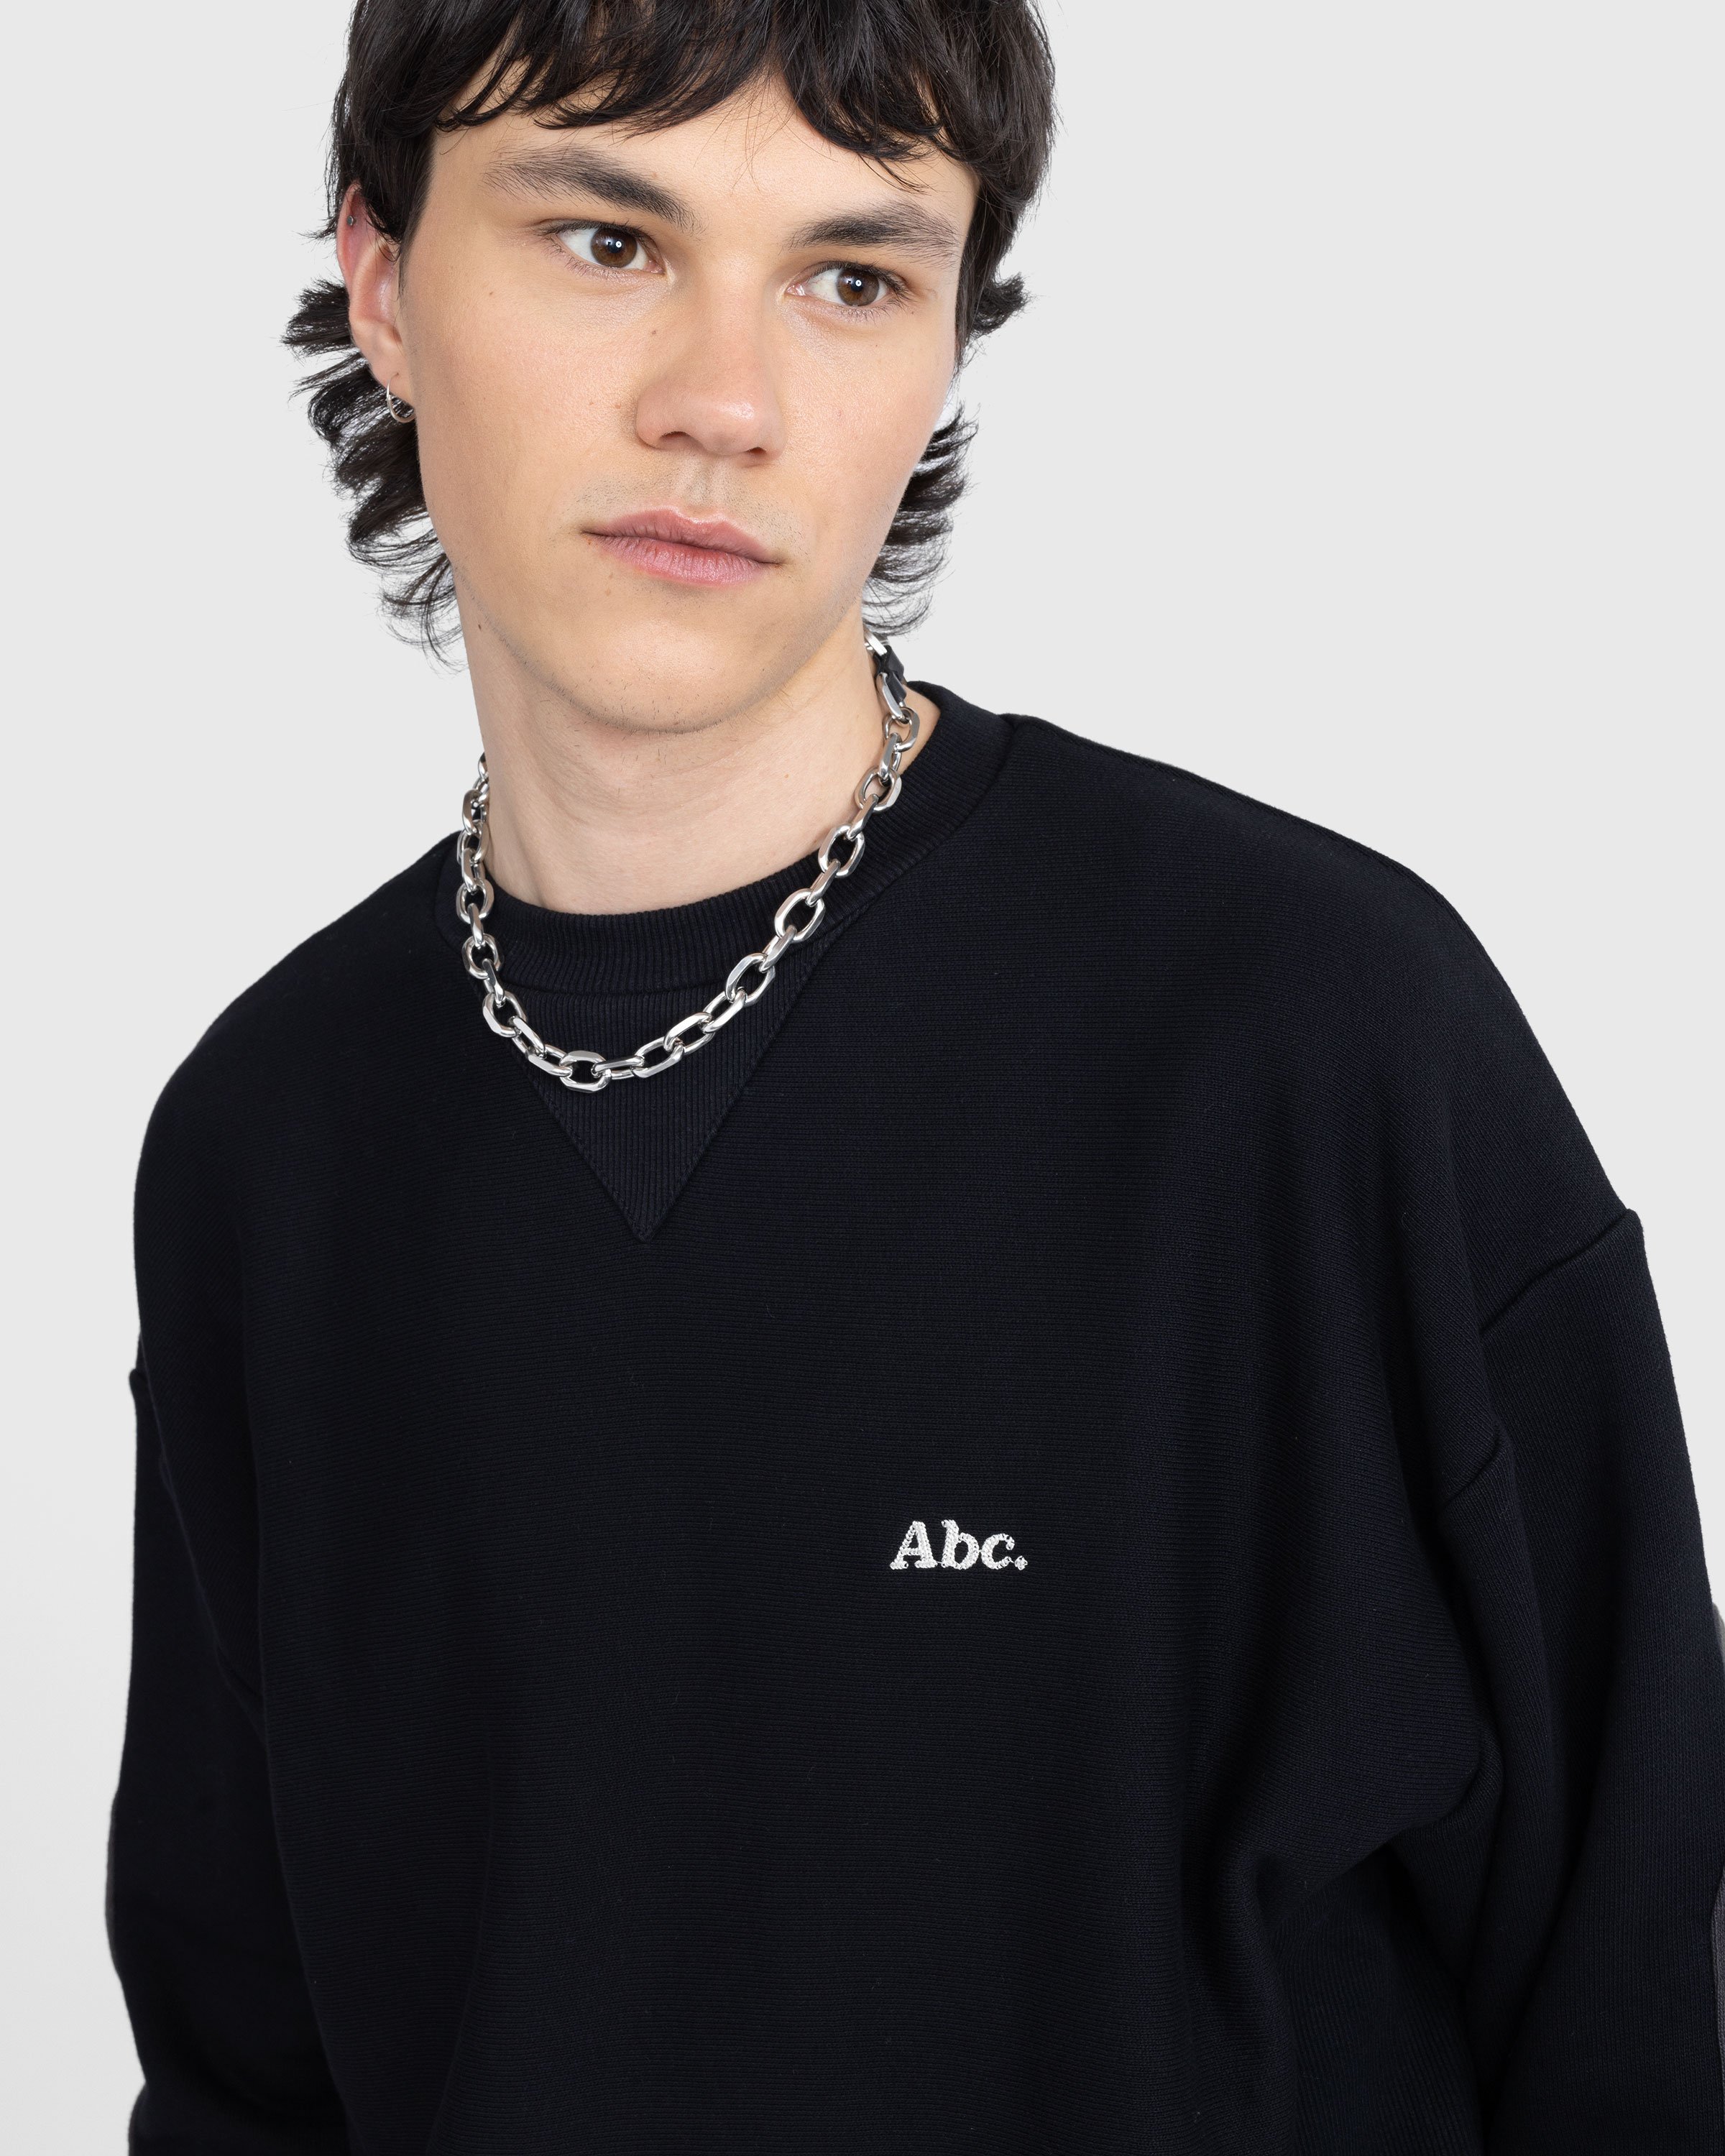 Abc. - Tri-Tone Crewneck Sweatshirt - Clothing - Black - Image 4